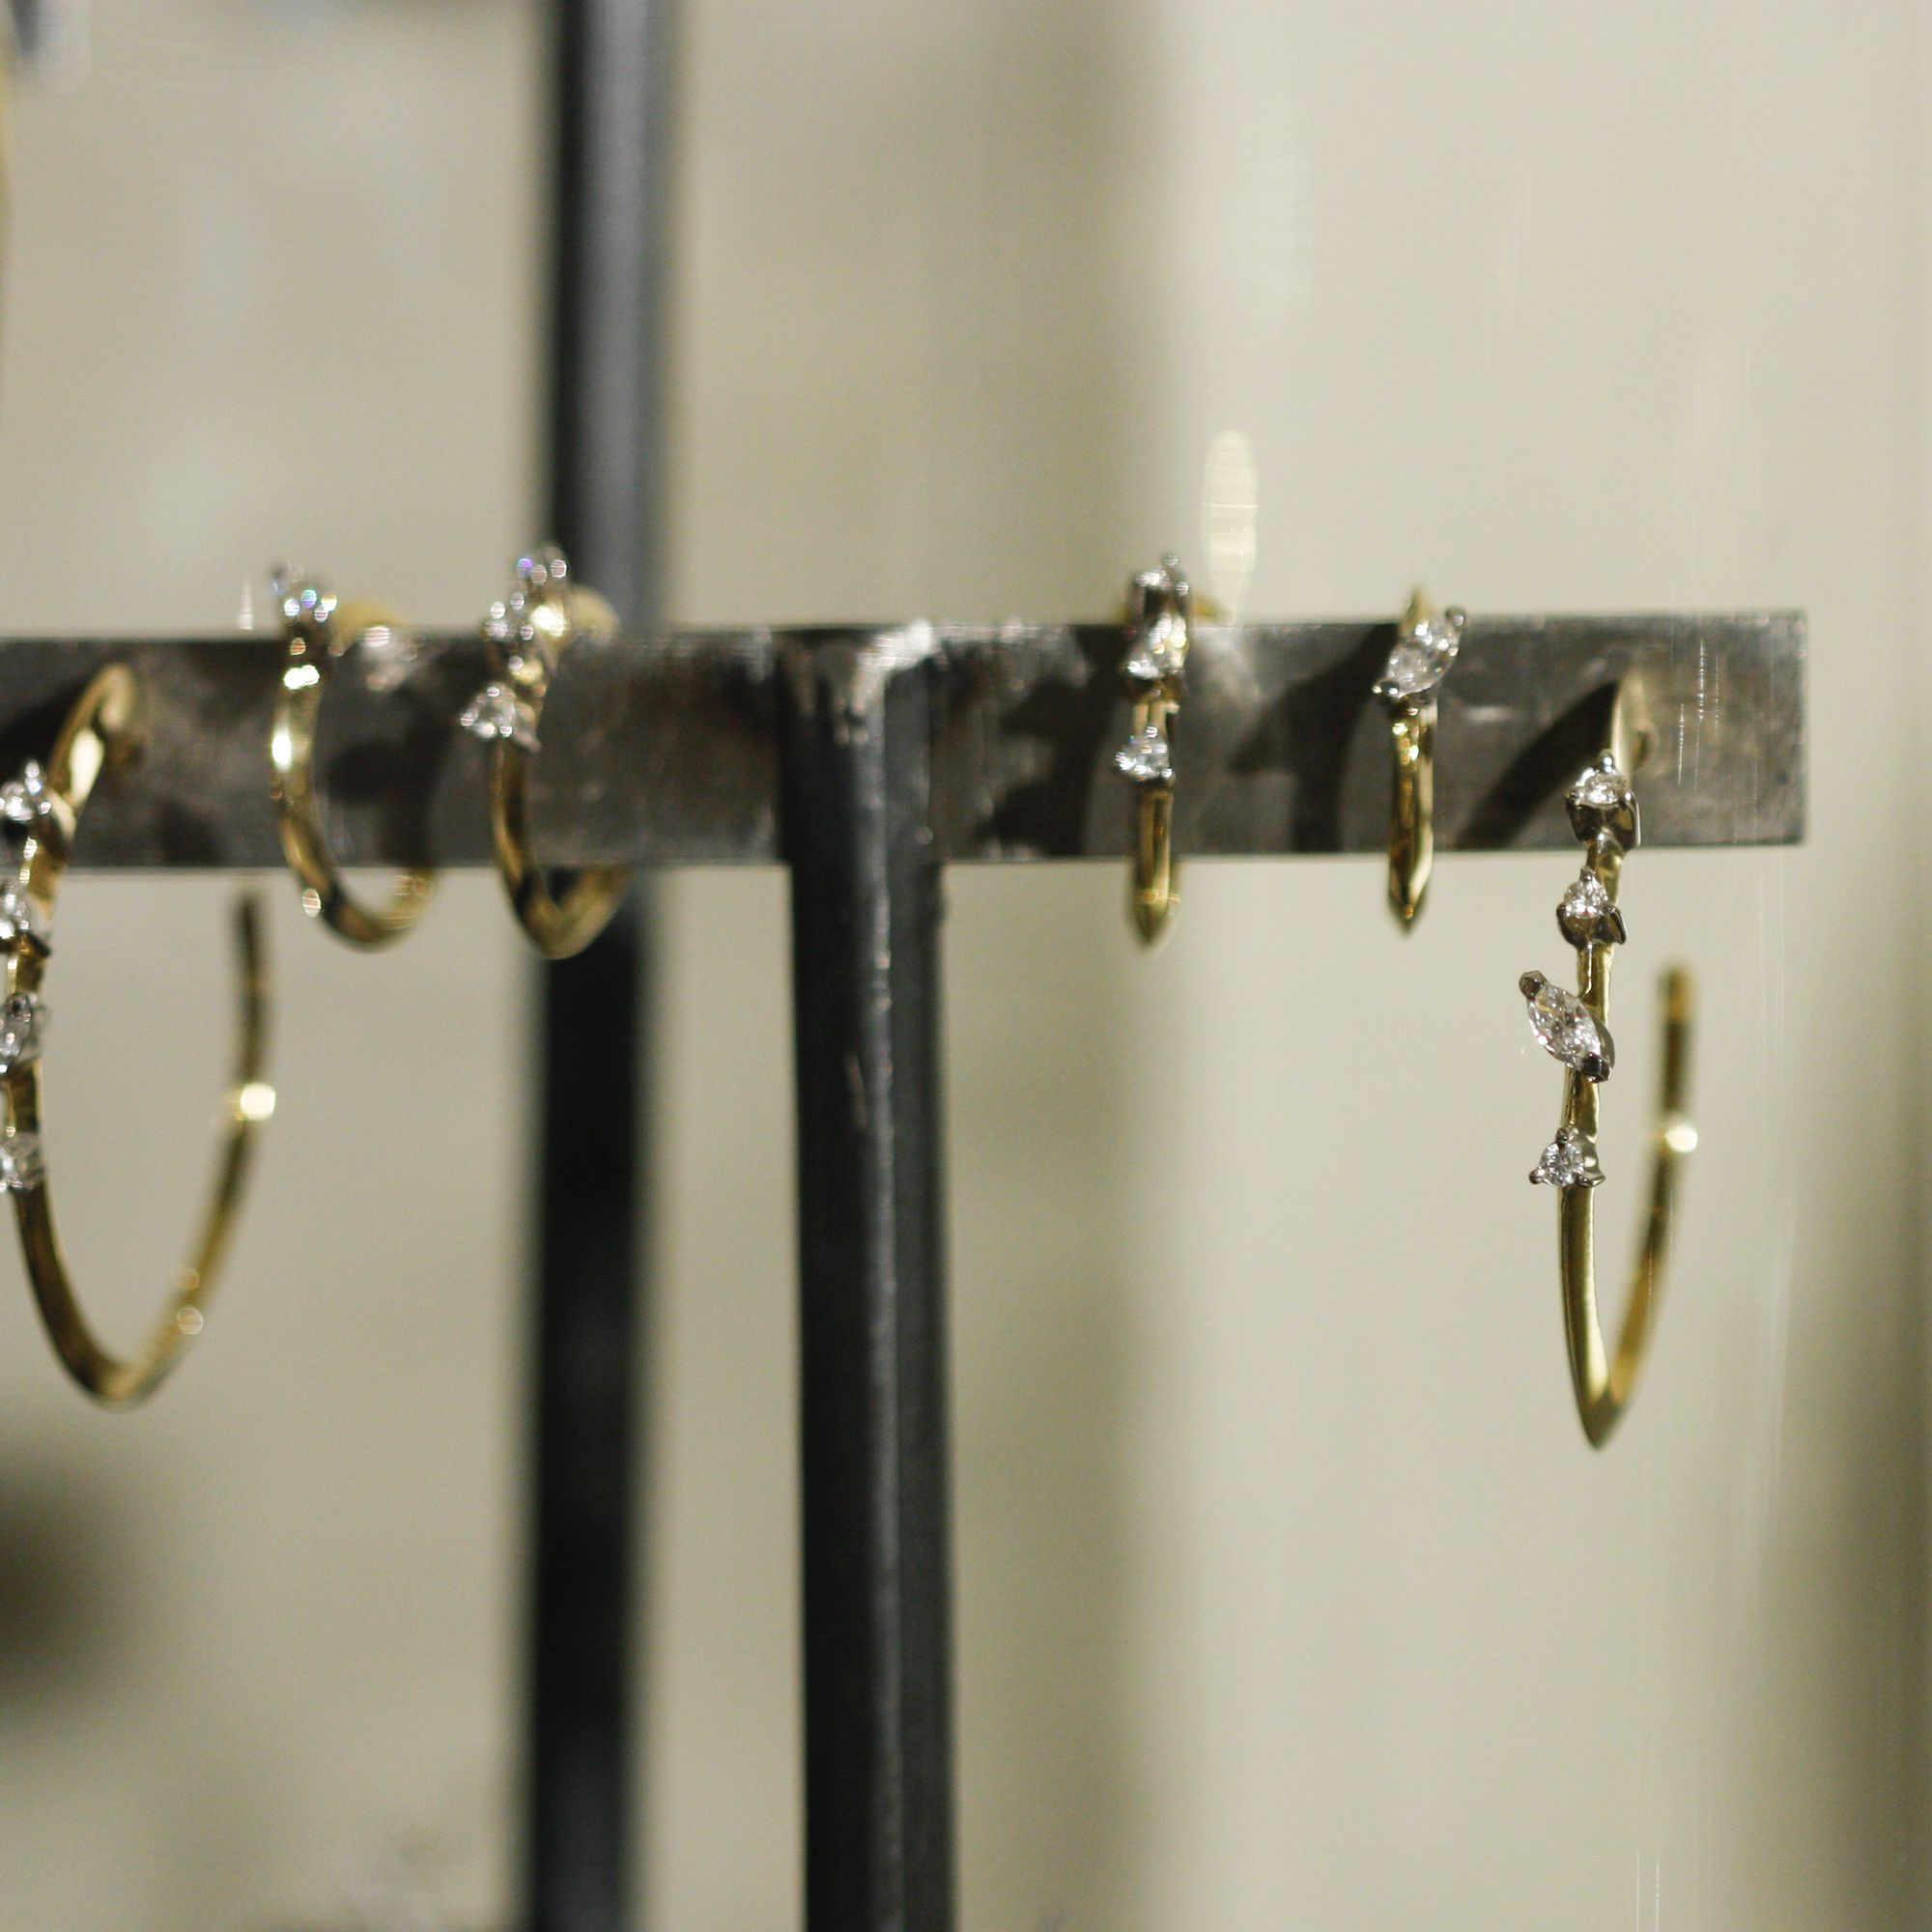 Yellow 'Balance' hoop earrings medium size  BALANCE | OR CERCHIO MEDIOAU18G CT.0,32